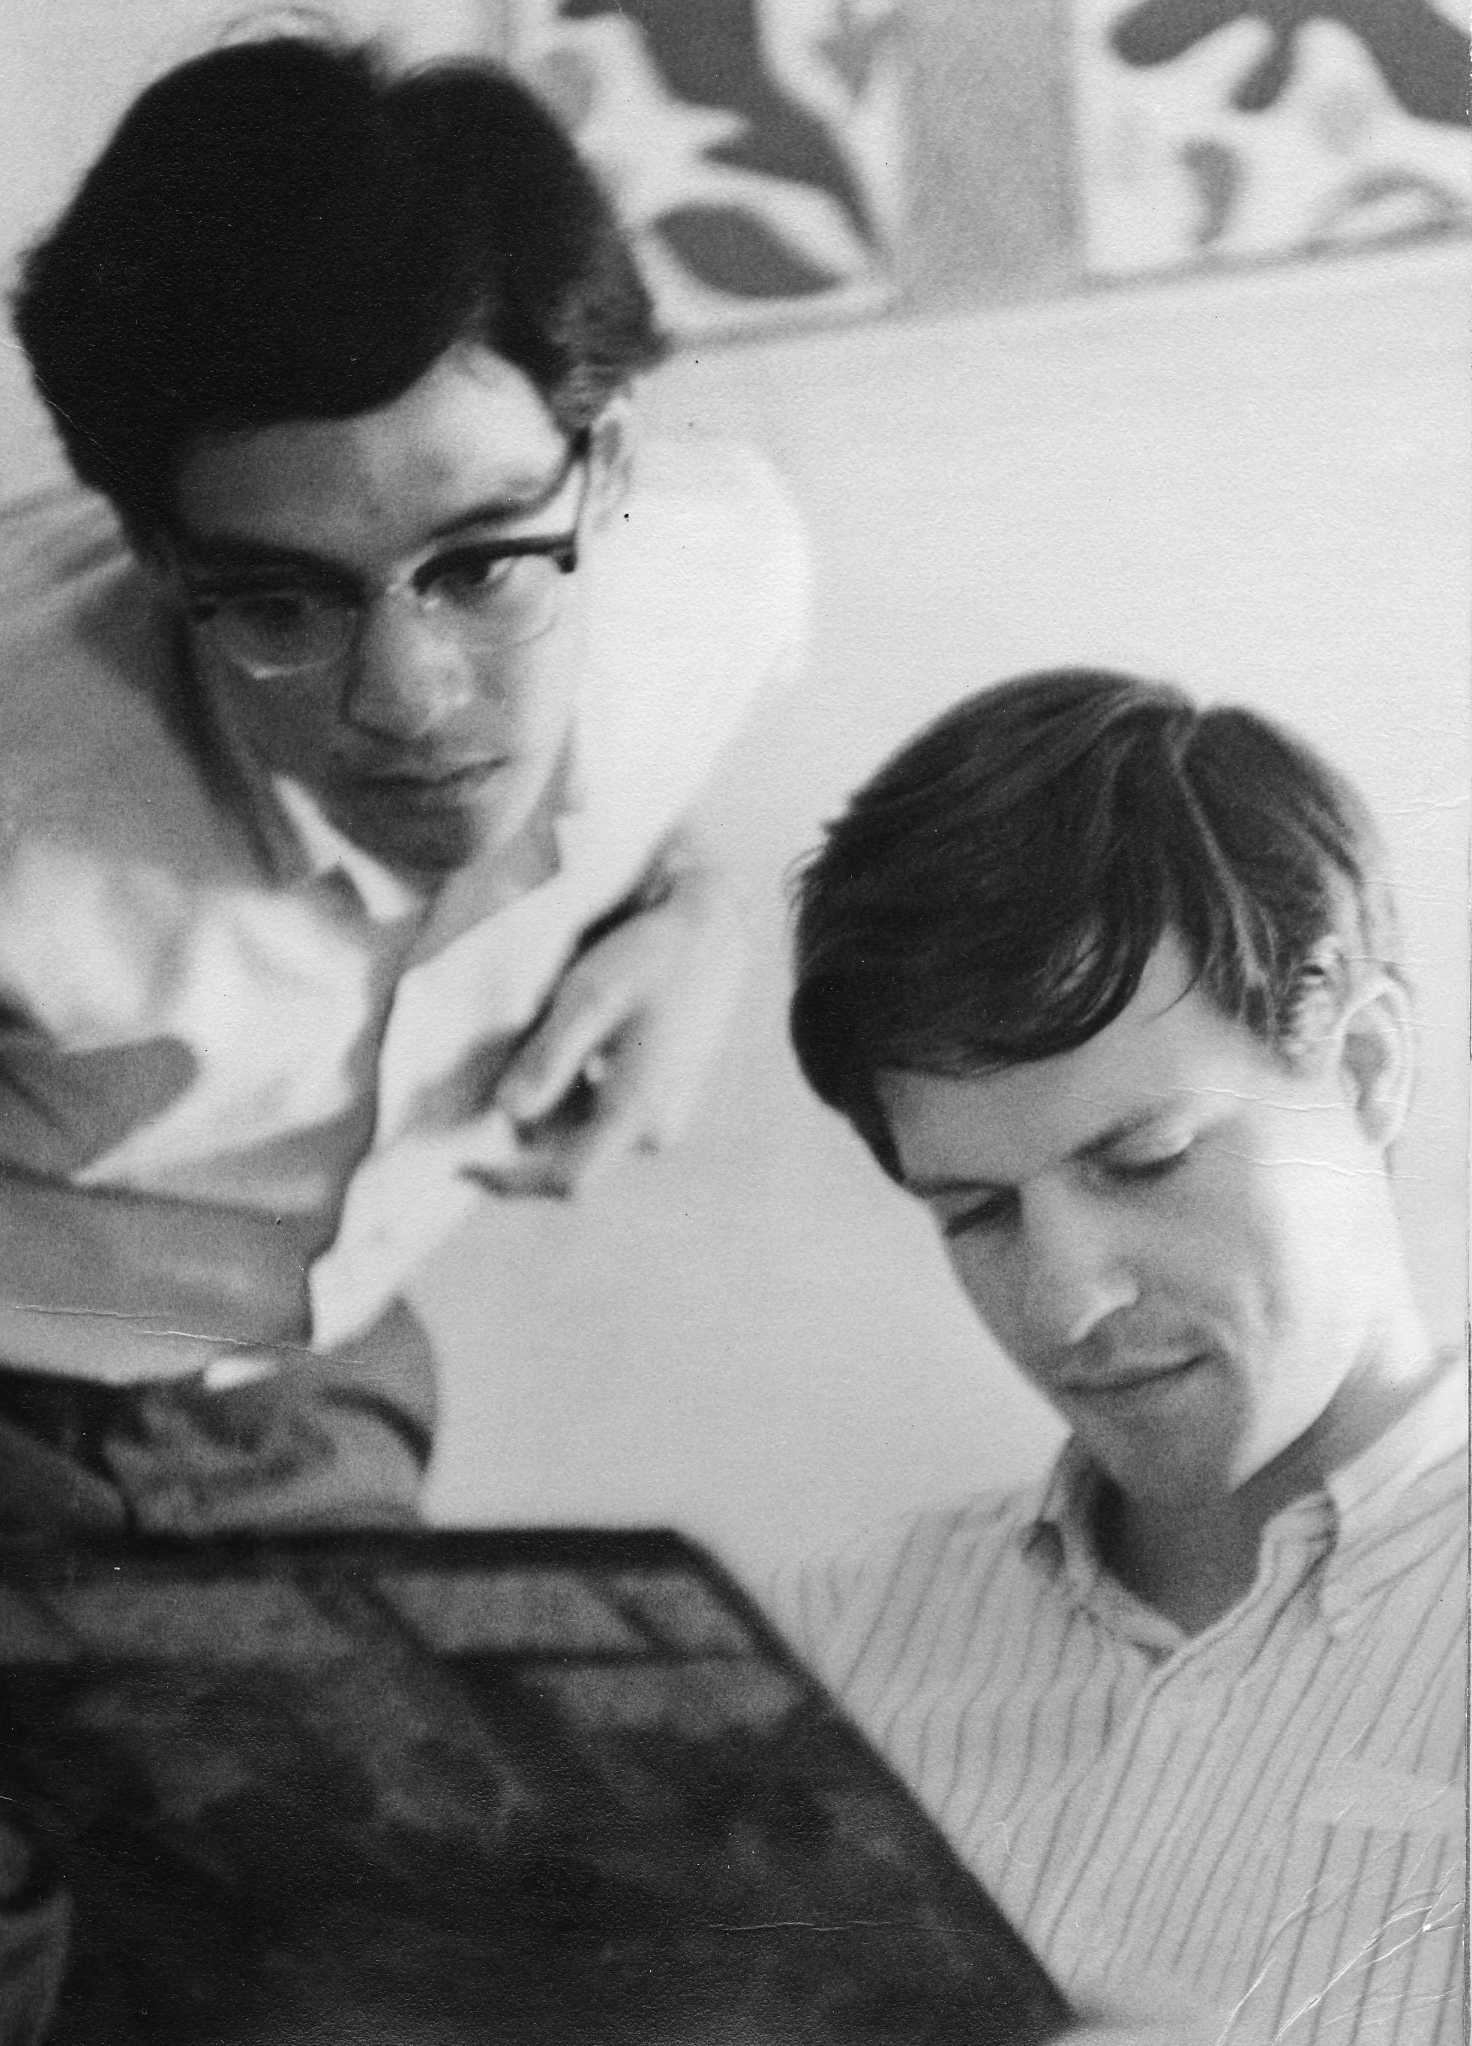 Dennis Kam and John Van der Slice (1970s)